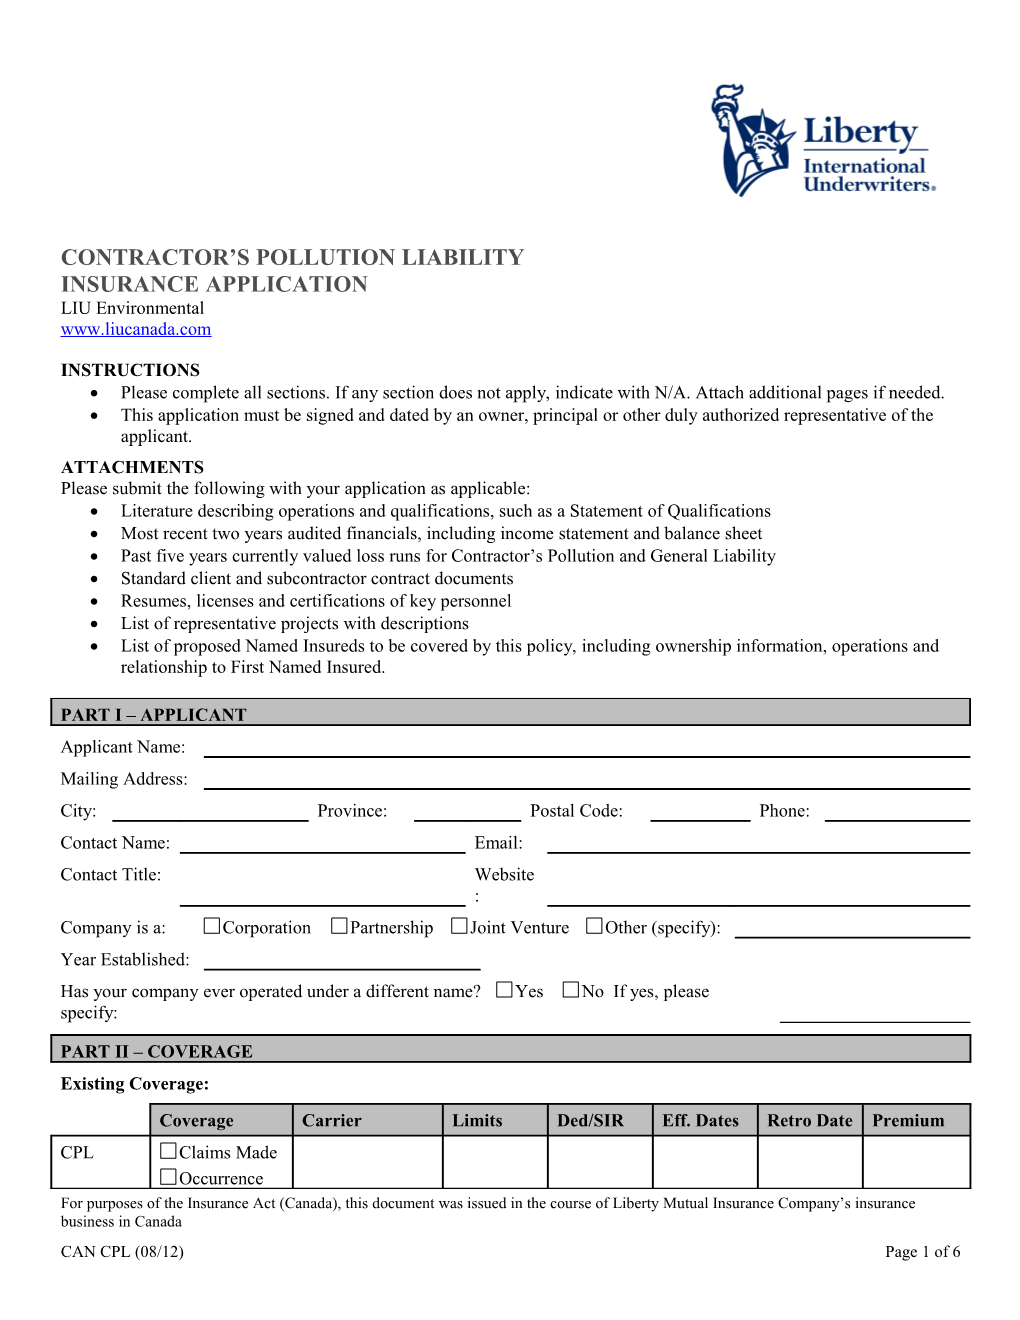 Application - Contractors Pollution Liability